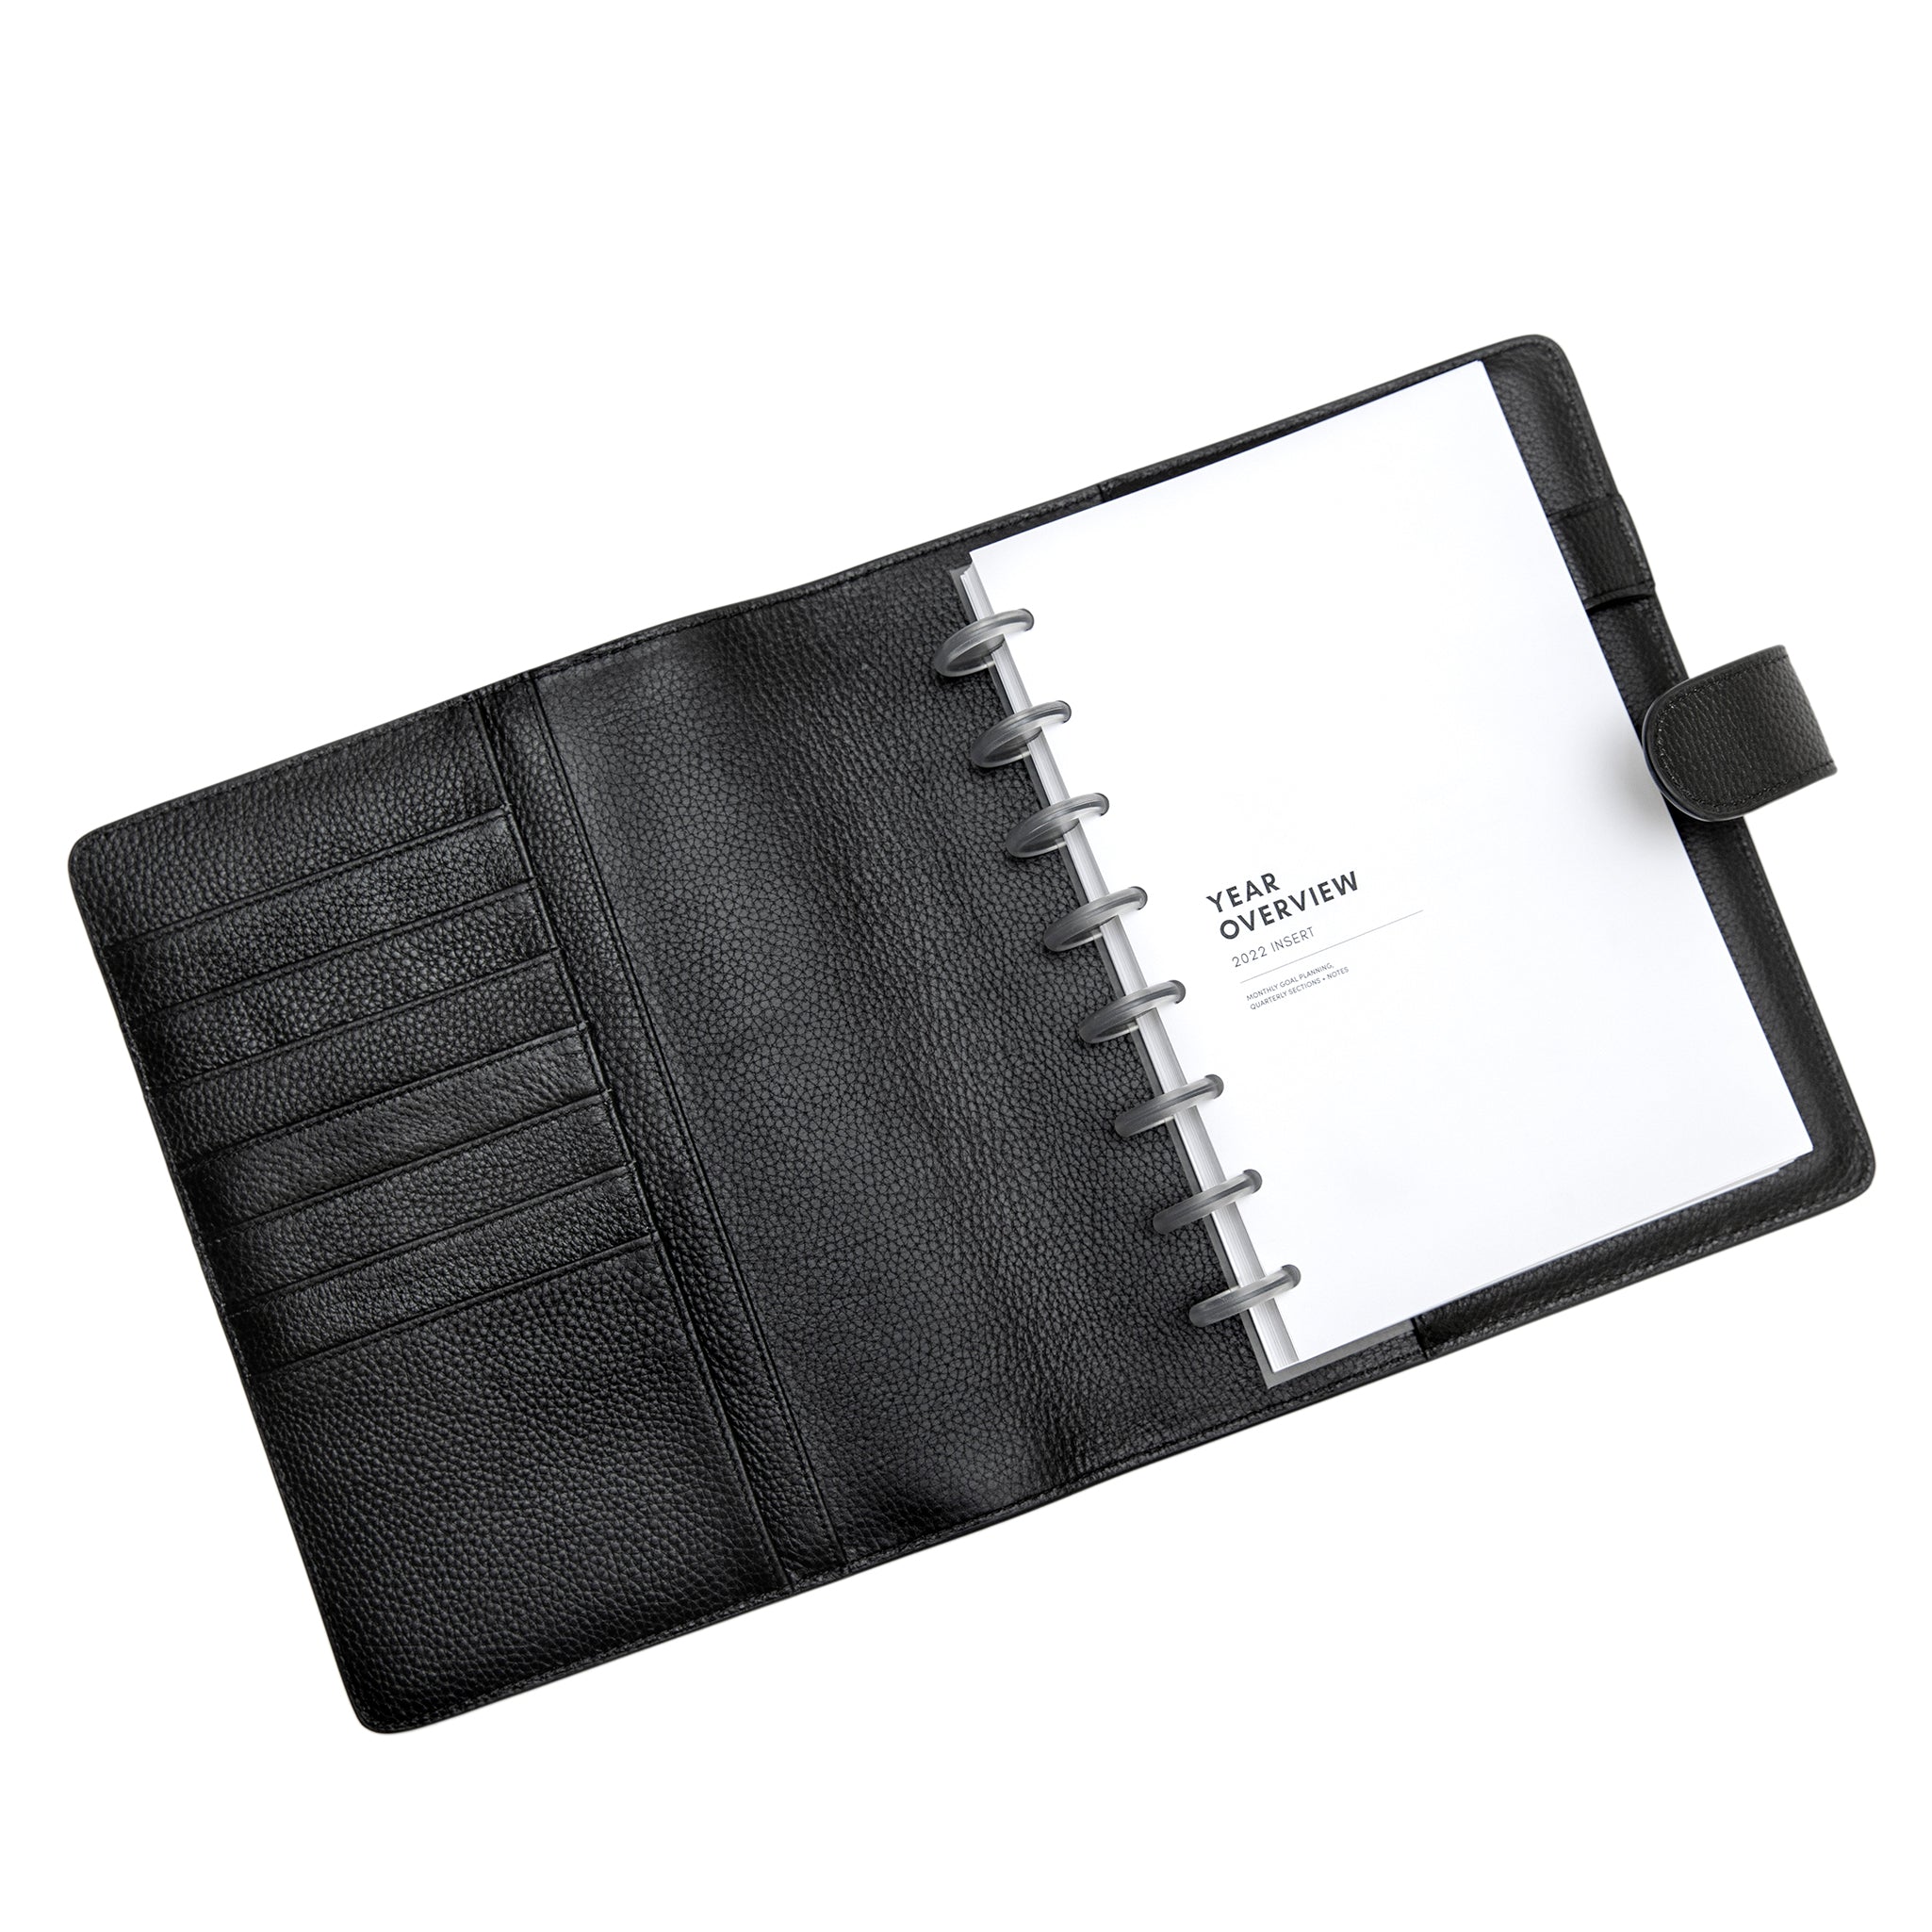 Large DESK AGENDA COVER Holders Memo Planner Men A5 Notebook Diary Luxury  Designer Agendas Protective Case Card Passport Holder Wallet Desktop  Notepad Covers Women From Bag3338, $38.14